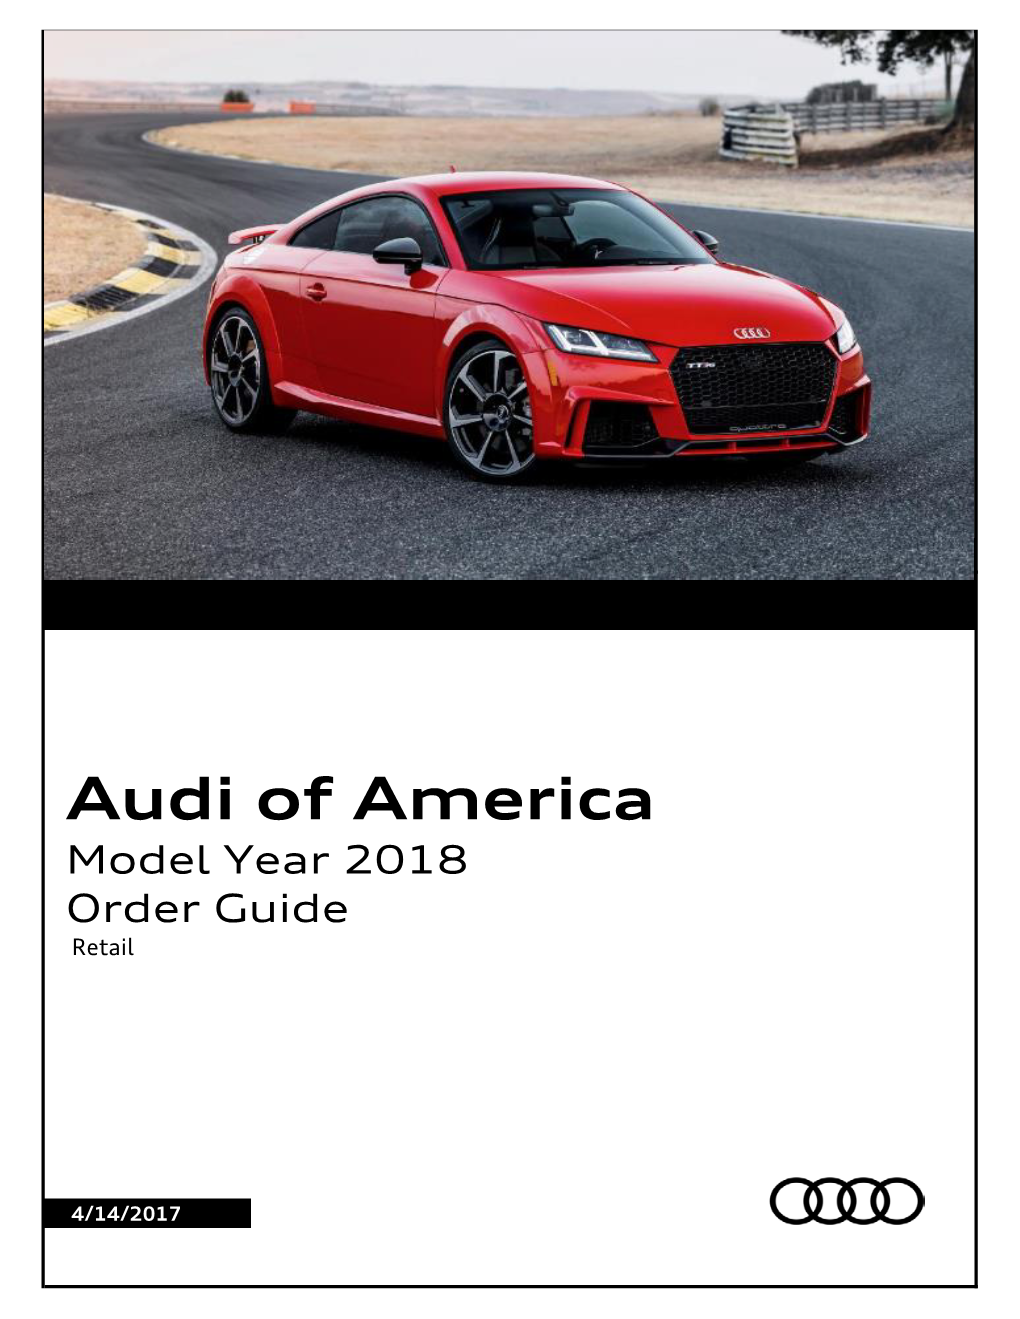 Audi Order Guide 2018 USA (Retail)